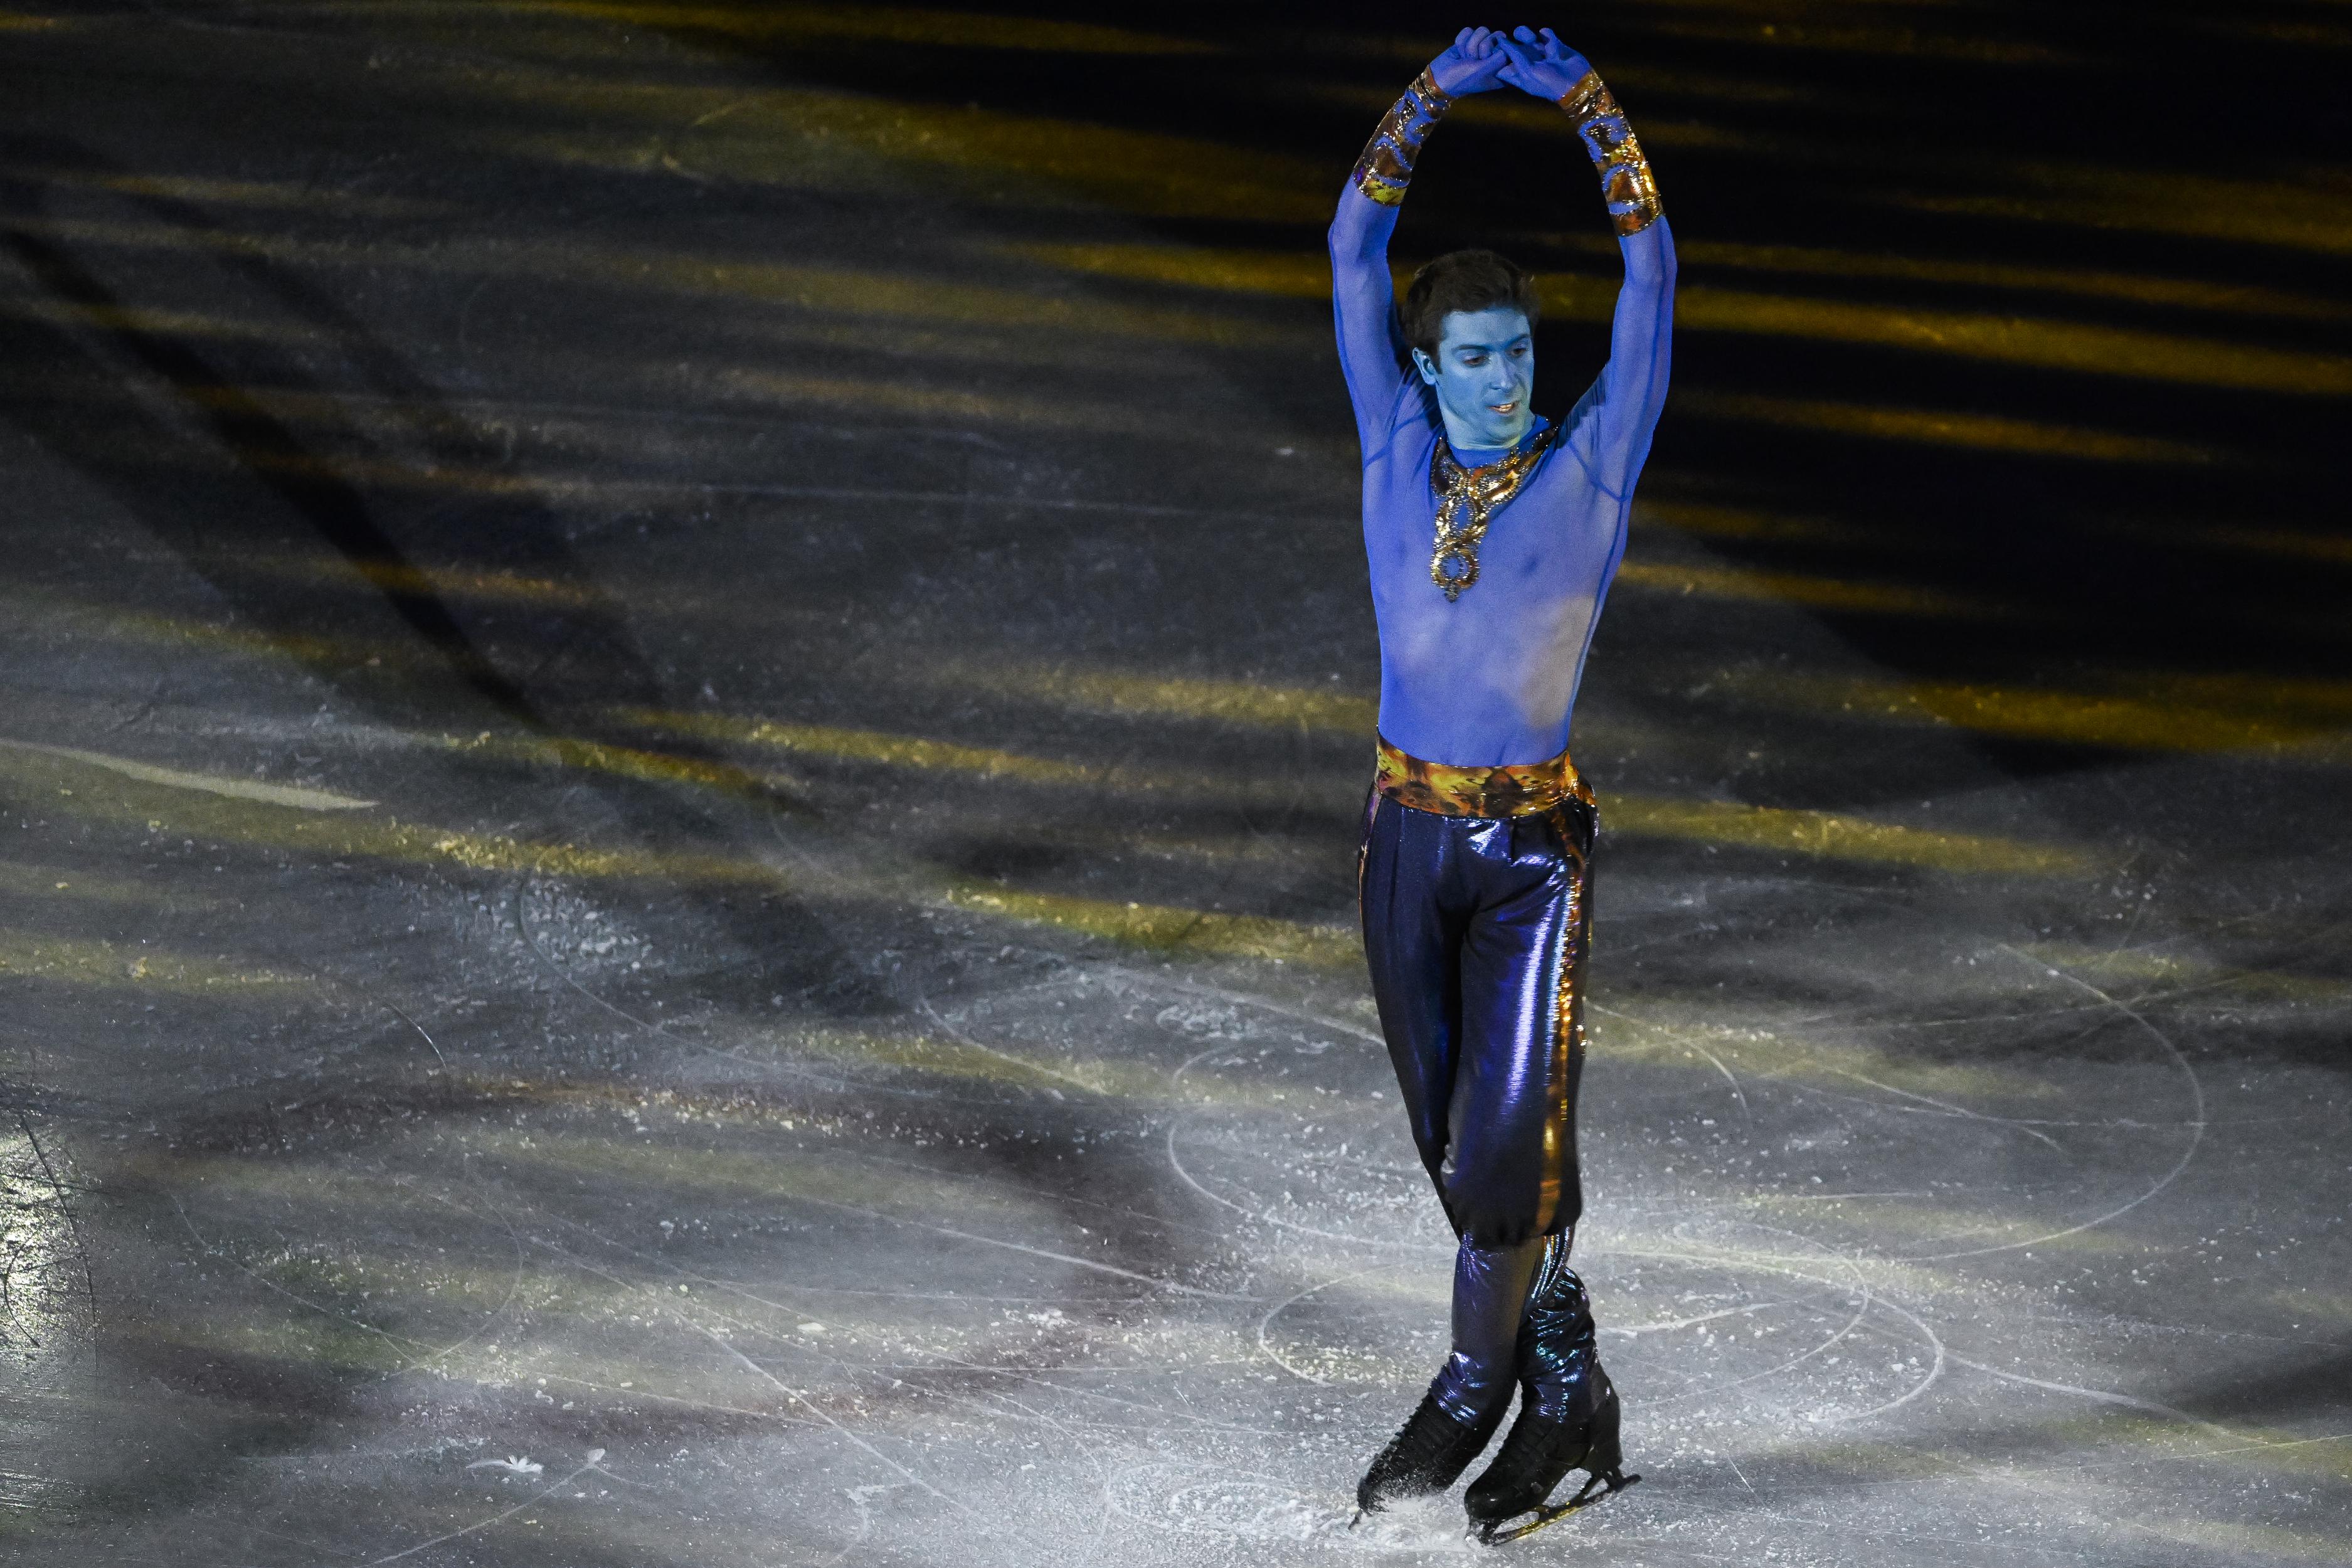 Olympics Figure Skating Gala Who wore it better? The Aladdin genie, the lumberjack, or Bing Dwen Dwen?